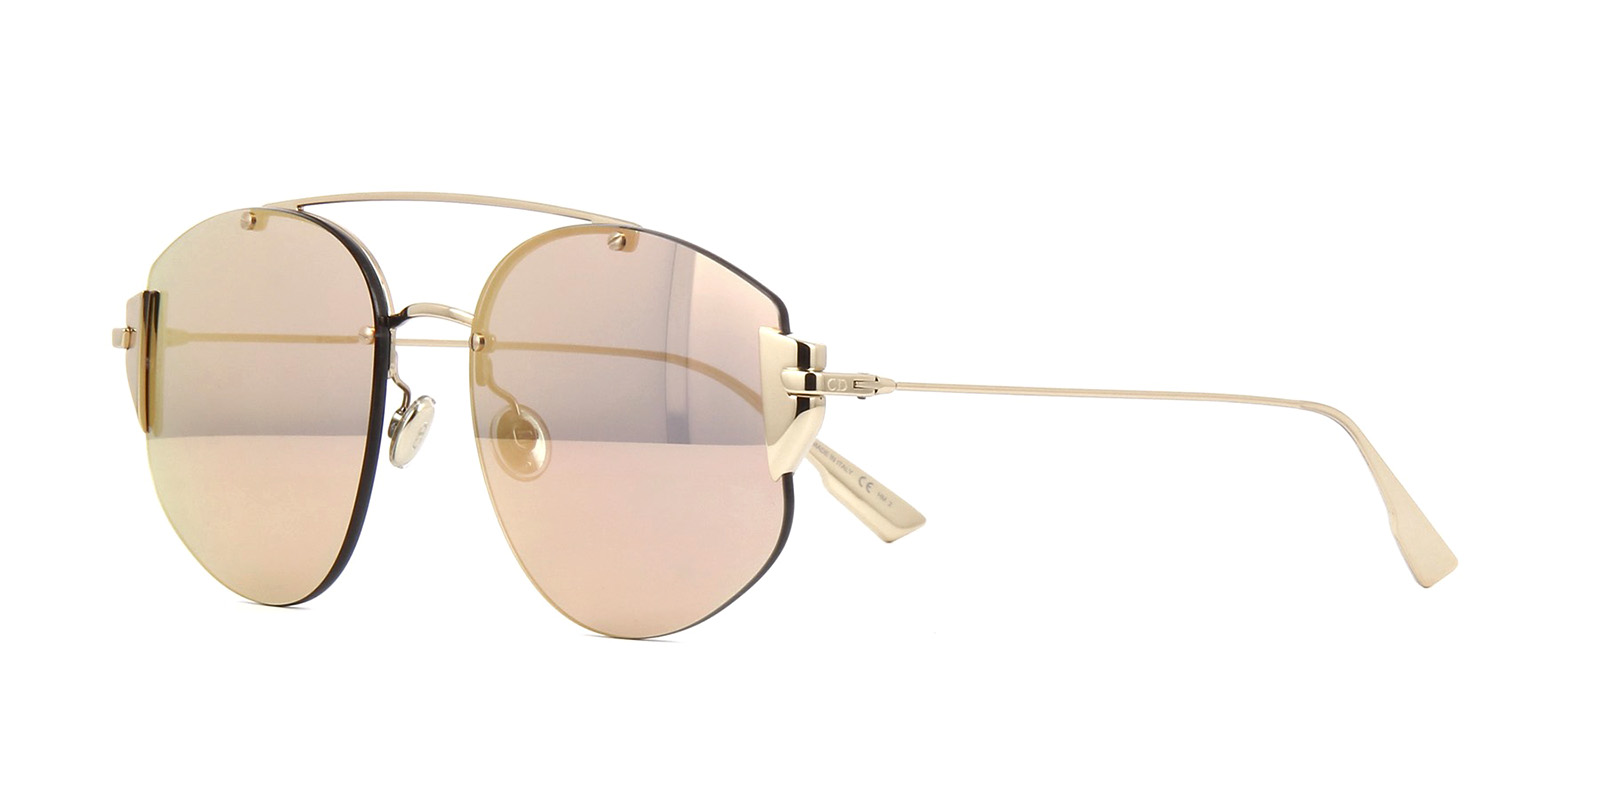 Dior Stronger women Sunglasses online sale